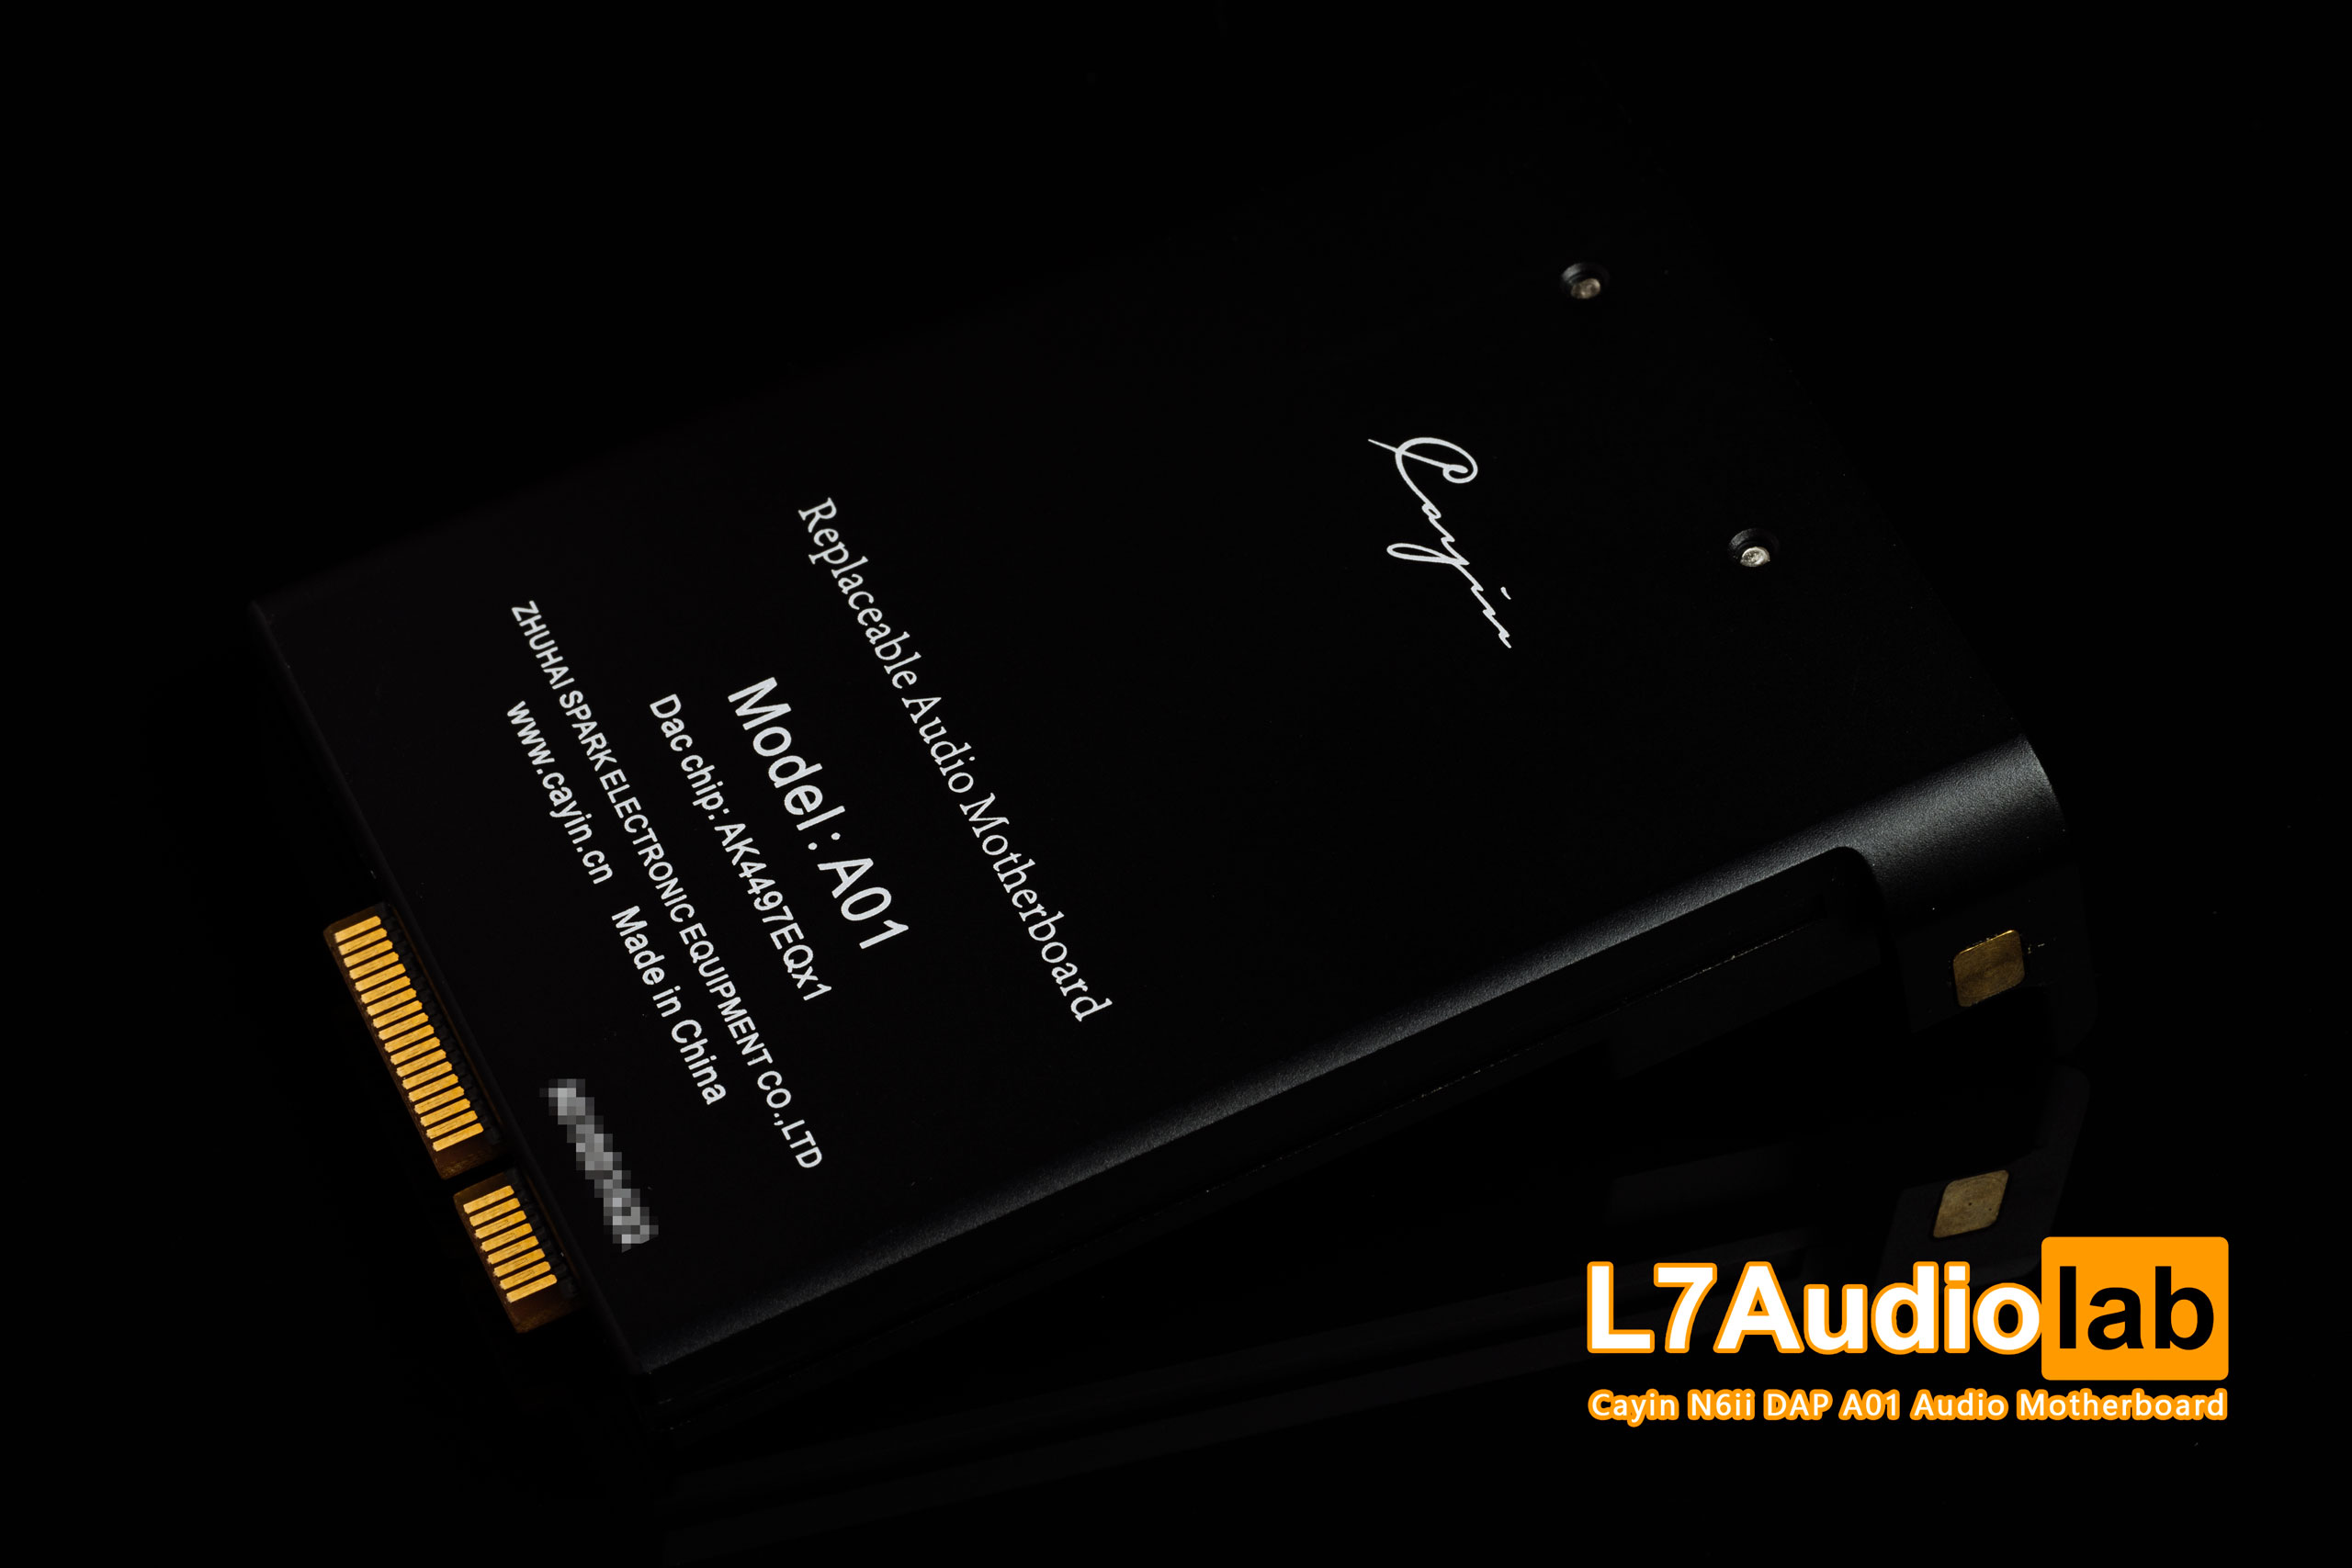 Measurements of Cayin N6ii A01 Audio Motherboard - L7Audiolab